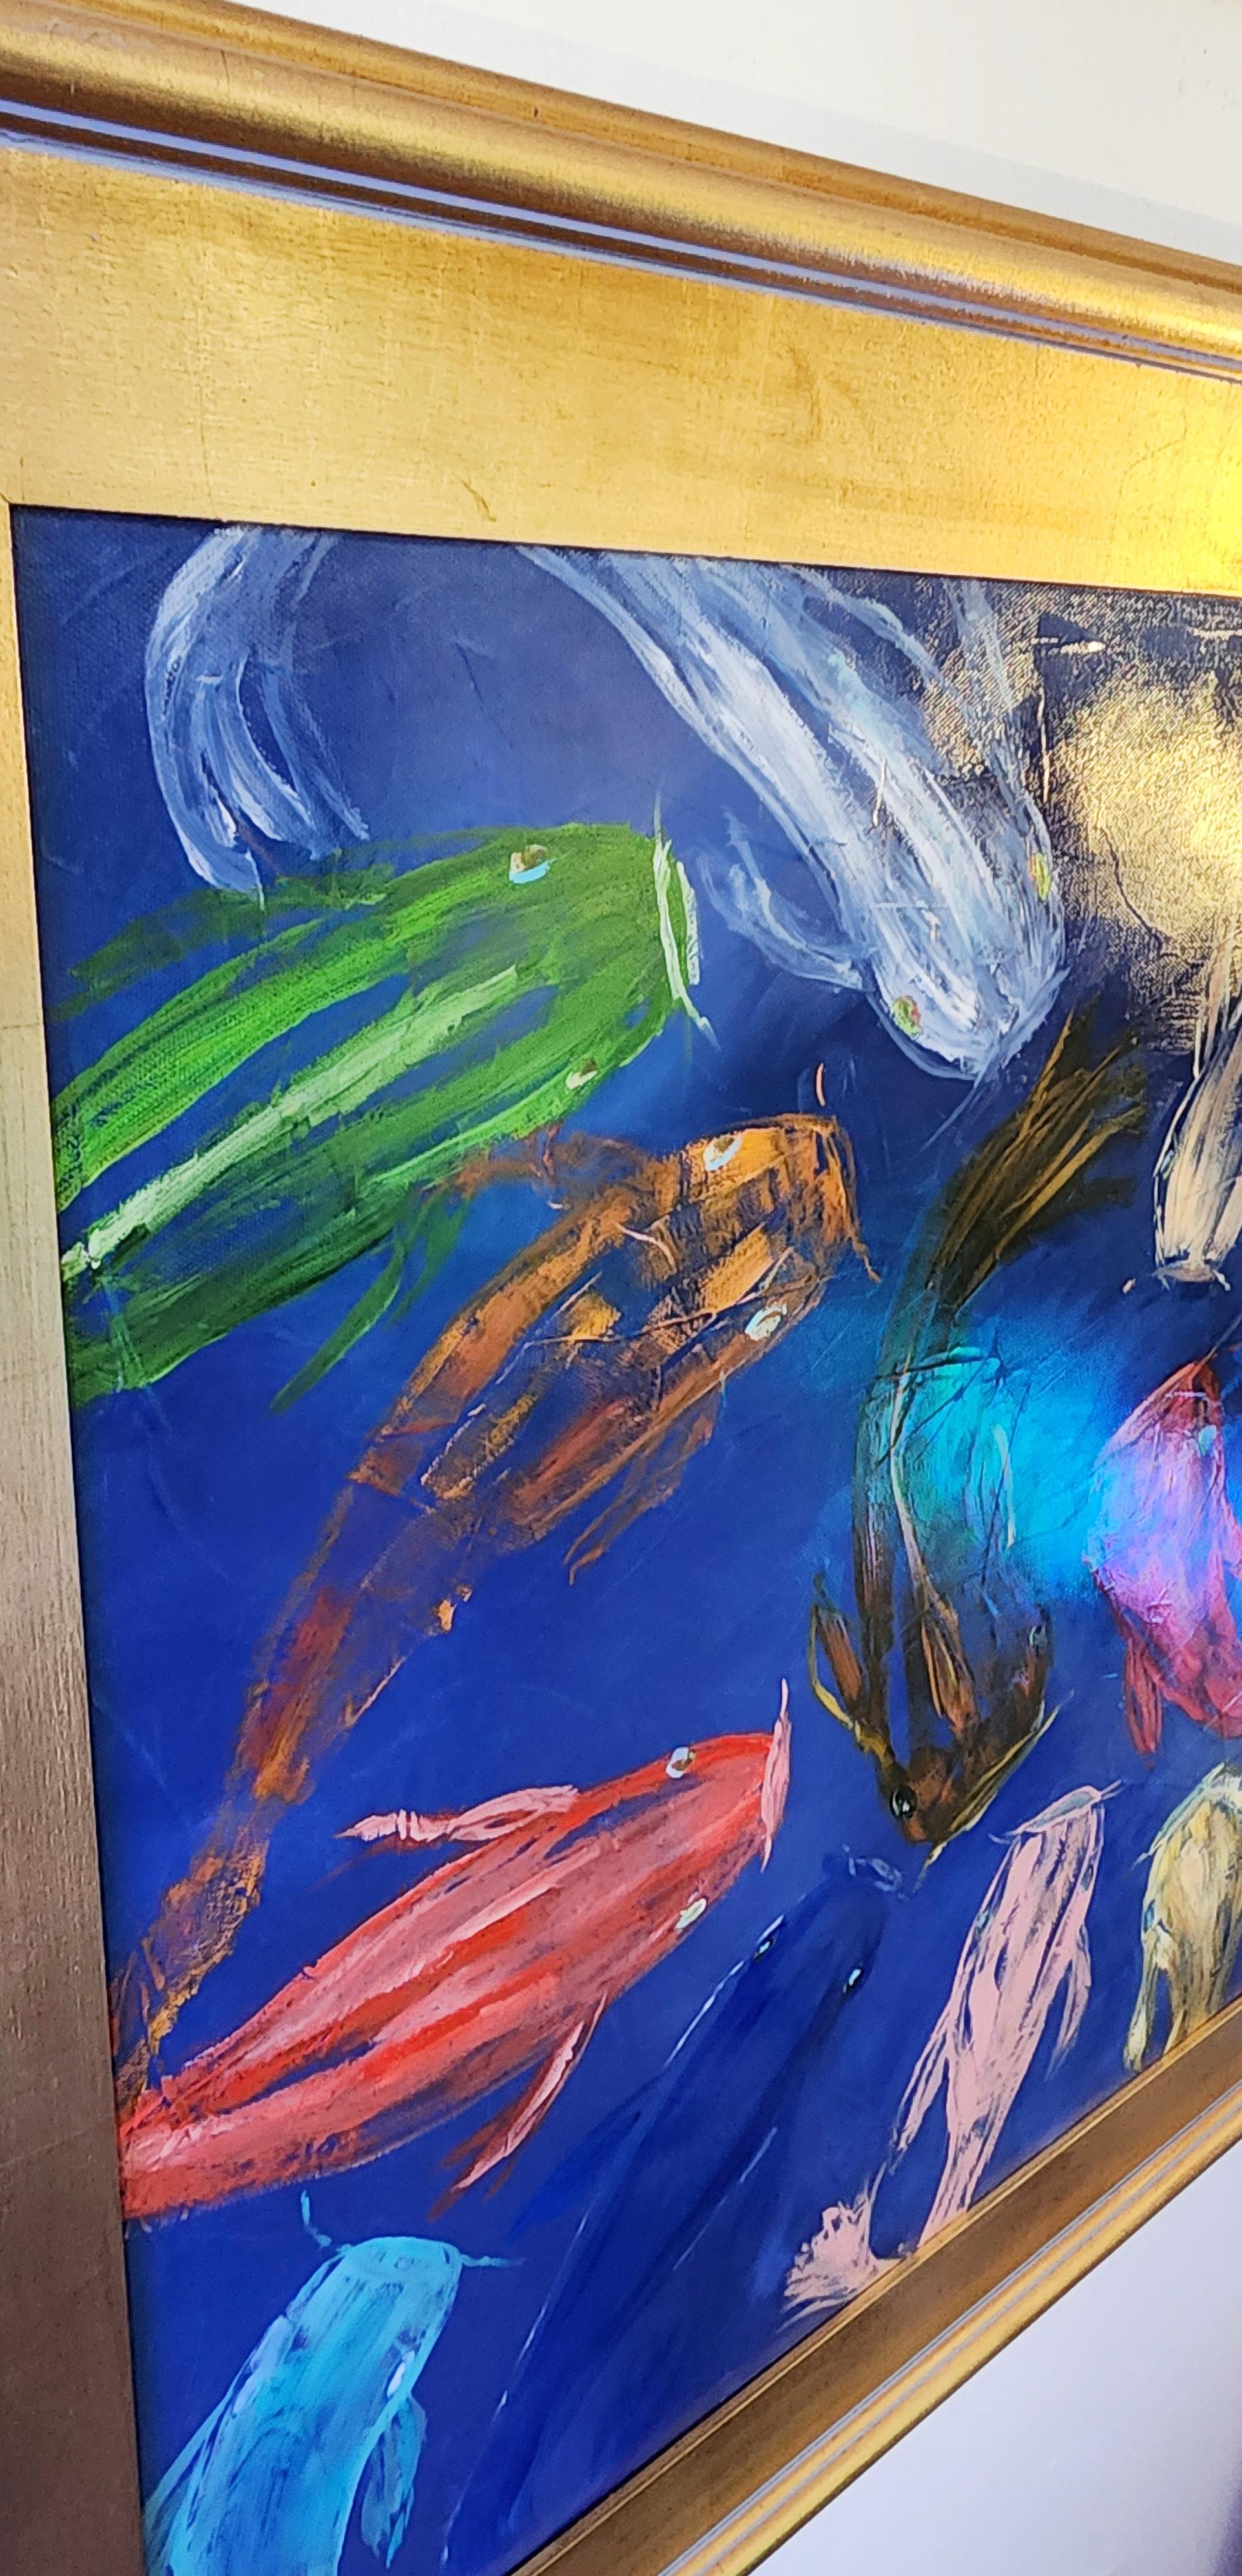 Blue Koi (Pond, Lush, Orange, White, Red, Movement, Fish) - Impressionist Painting by Jill Opelka